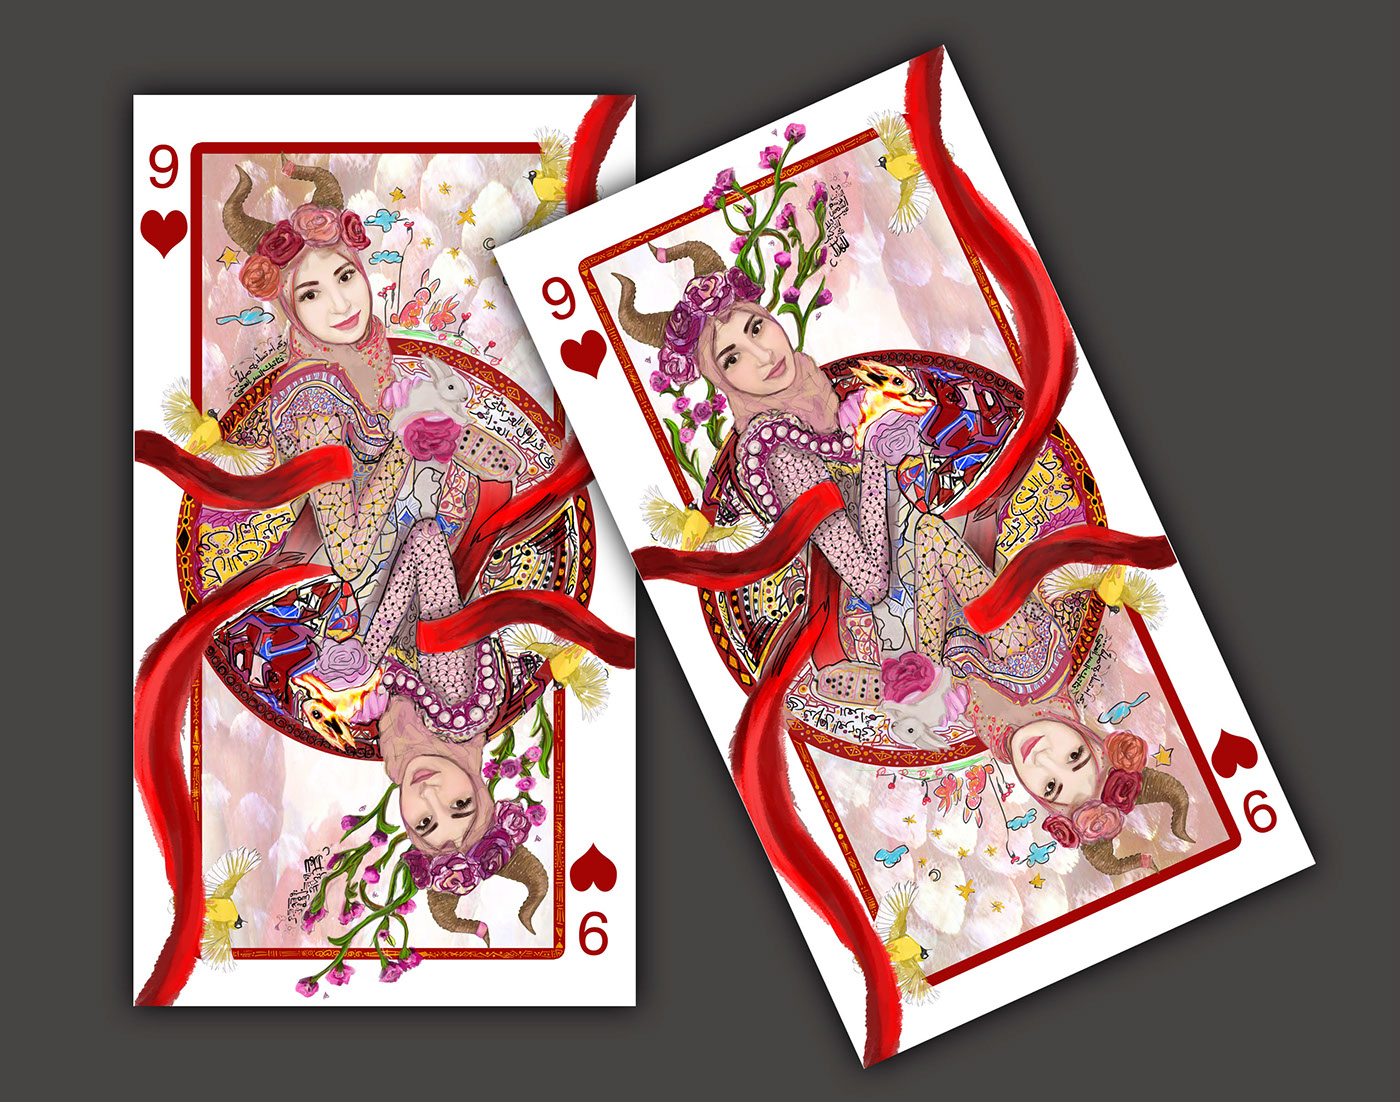 capricorn zodiac signs January 9 Weaver Finch rabbit Playing Cards